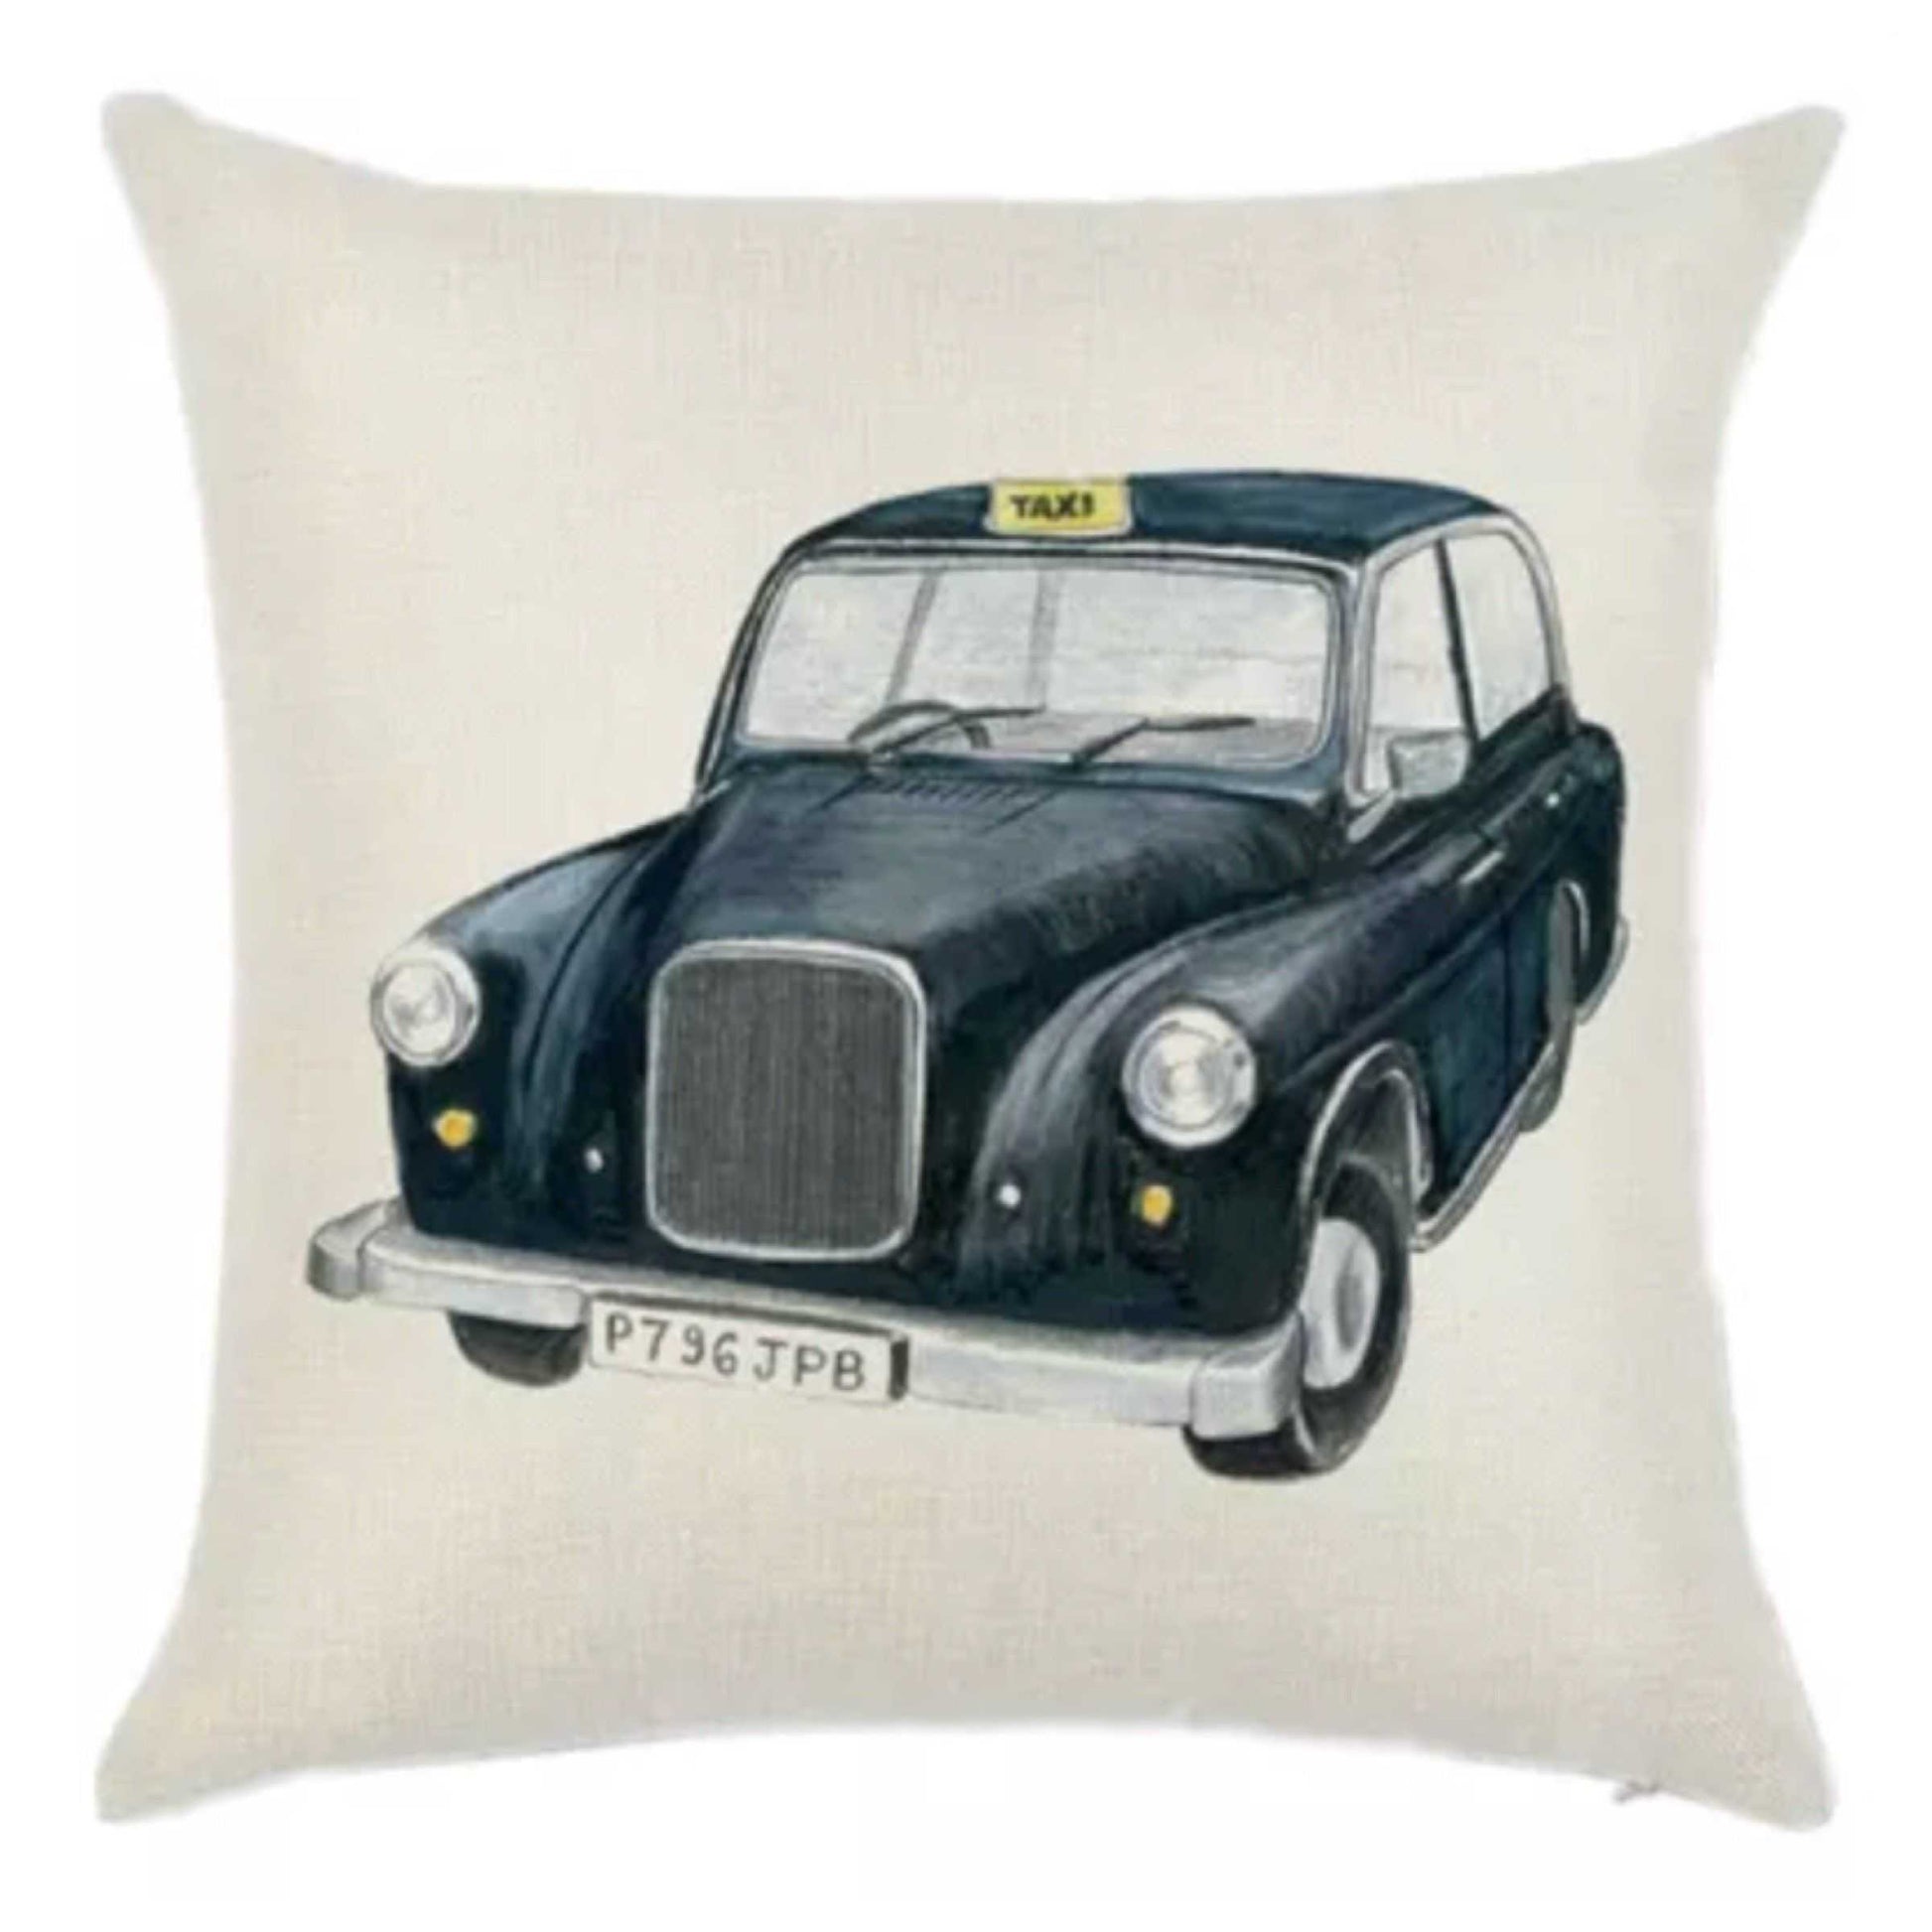 Cushion Pillow Vintage Black London Taxi